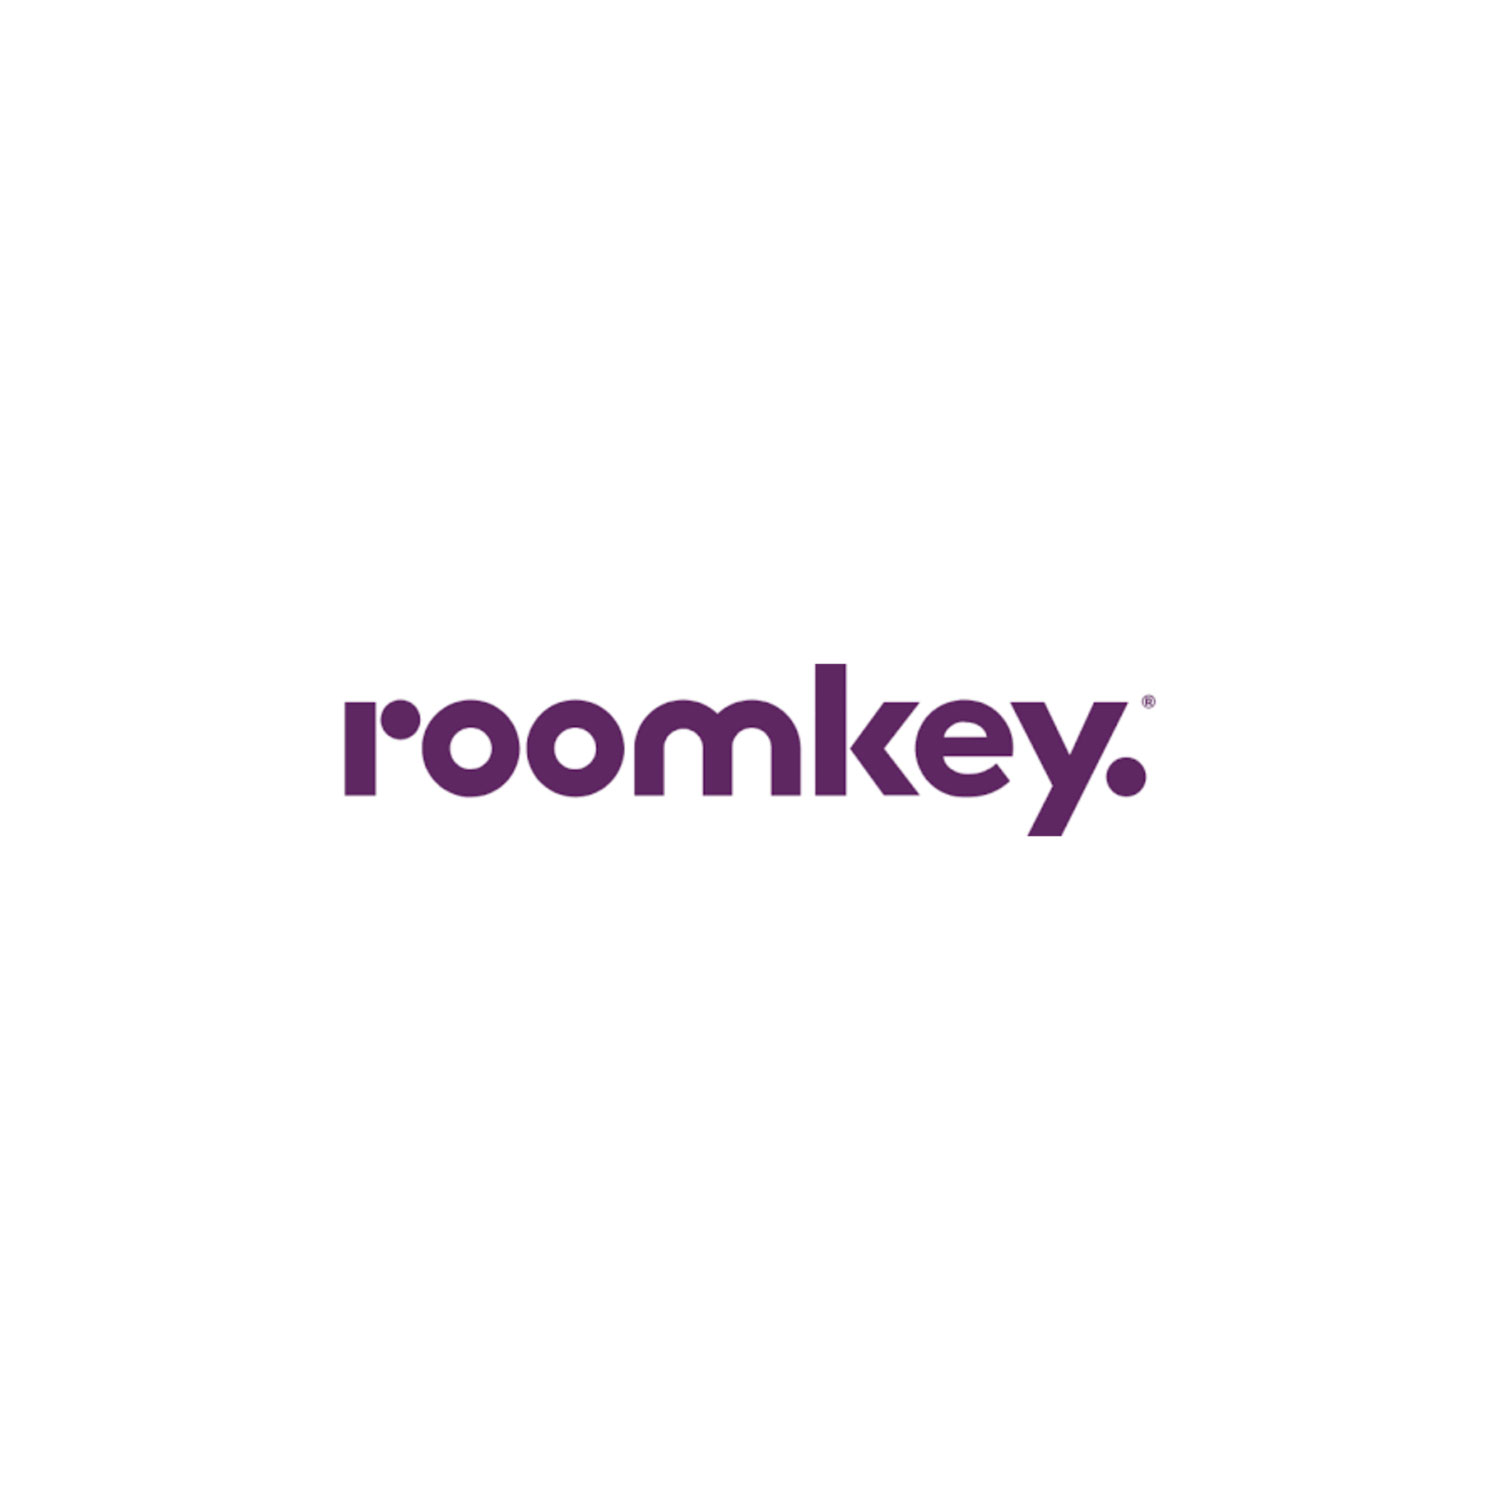 RoomKey